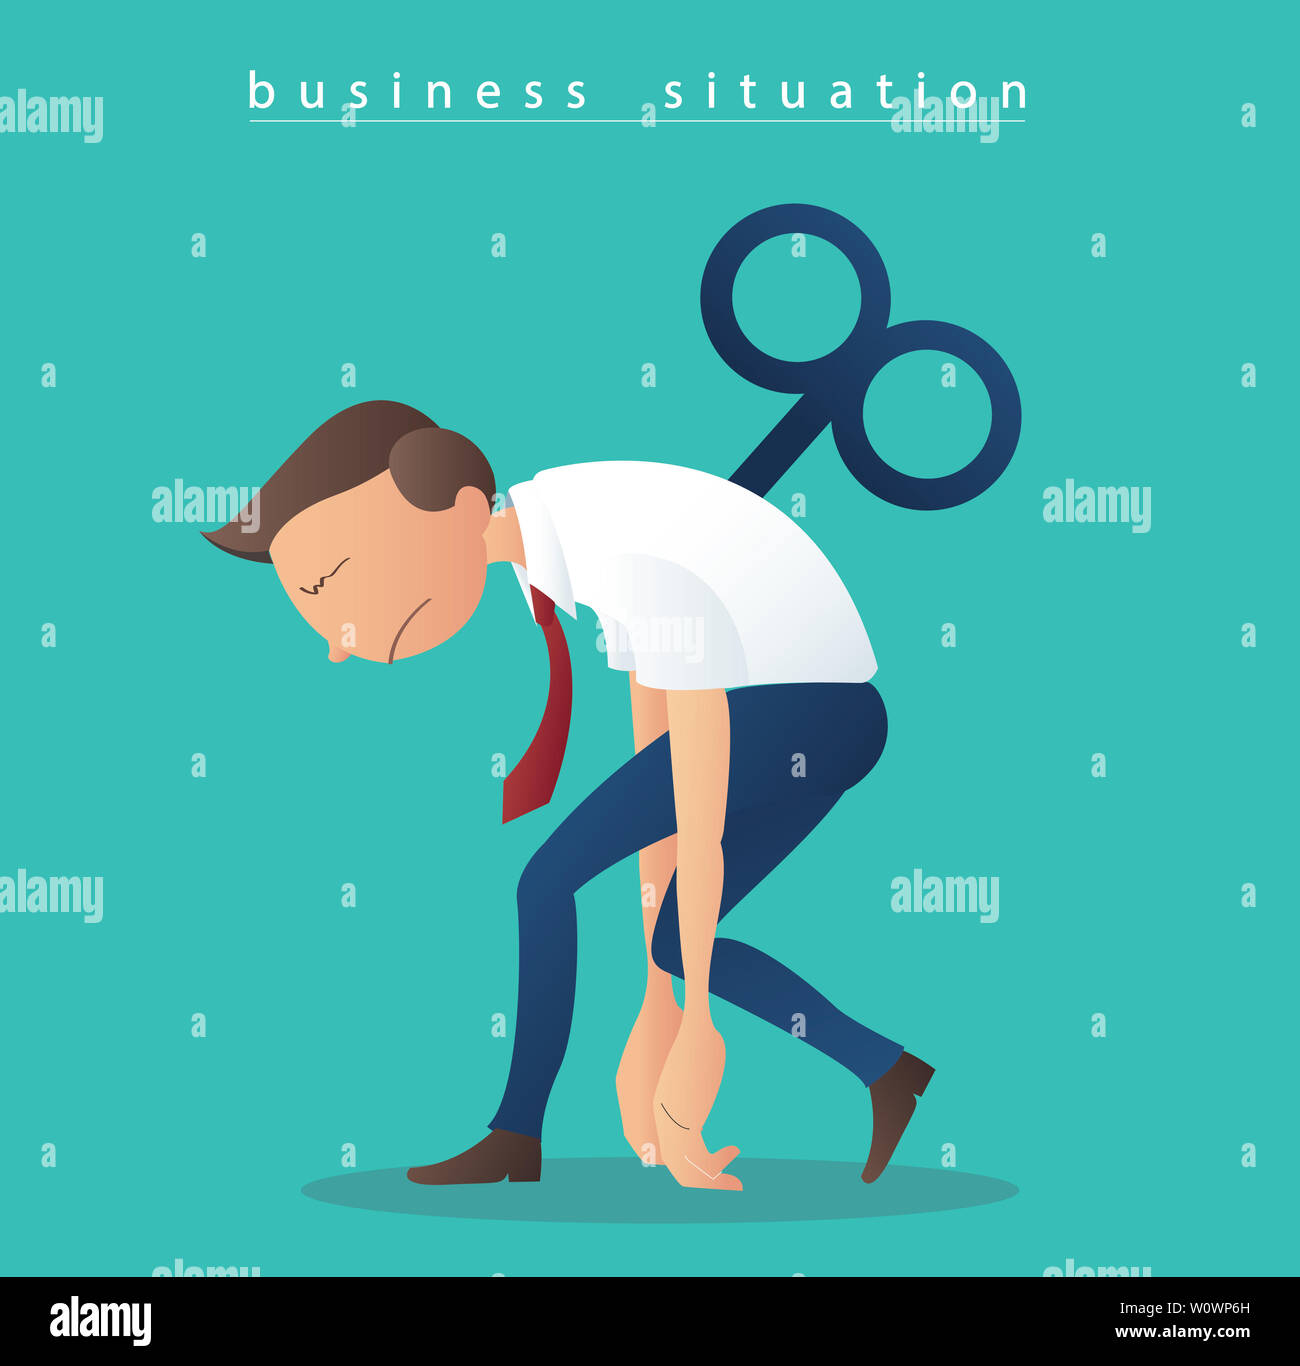 depression businessmen, Businessmen with wind-up key illustration Stock Photo